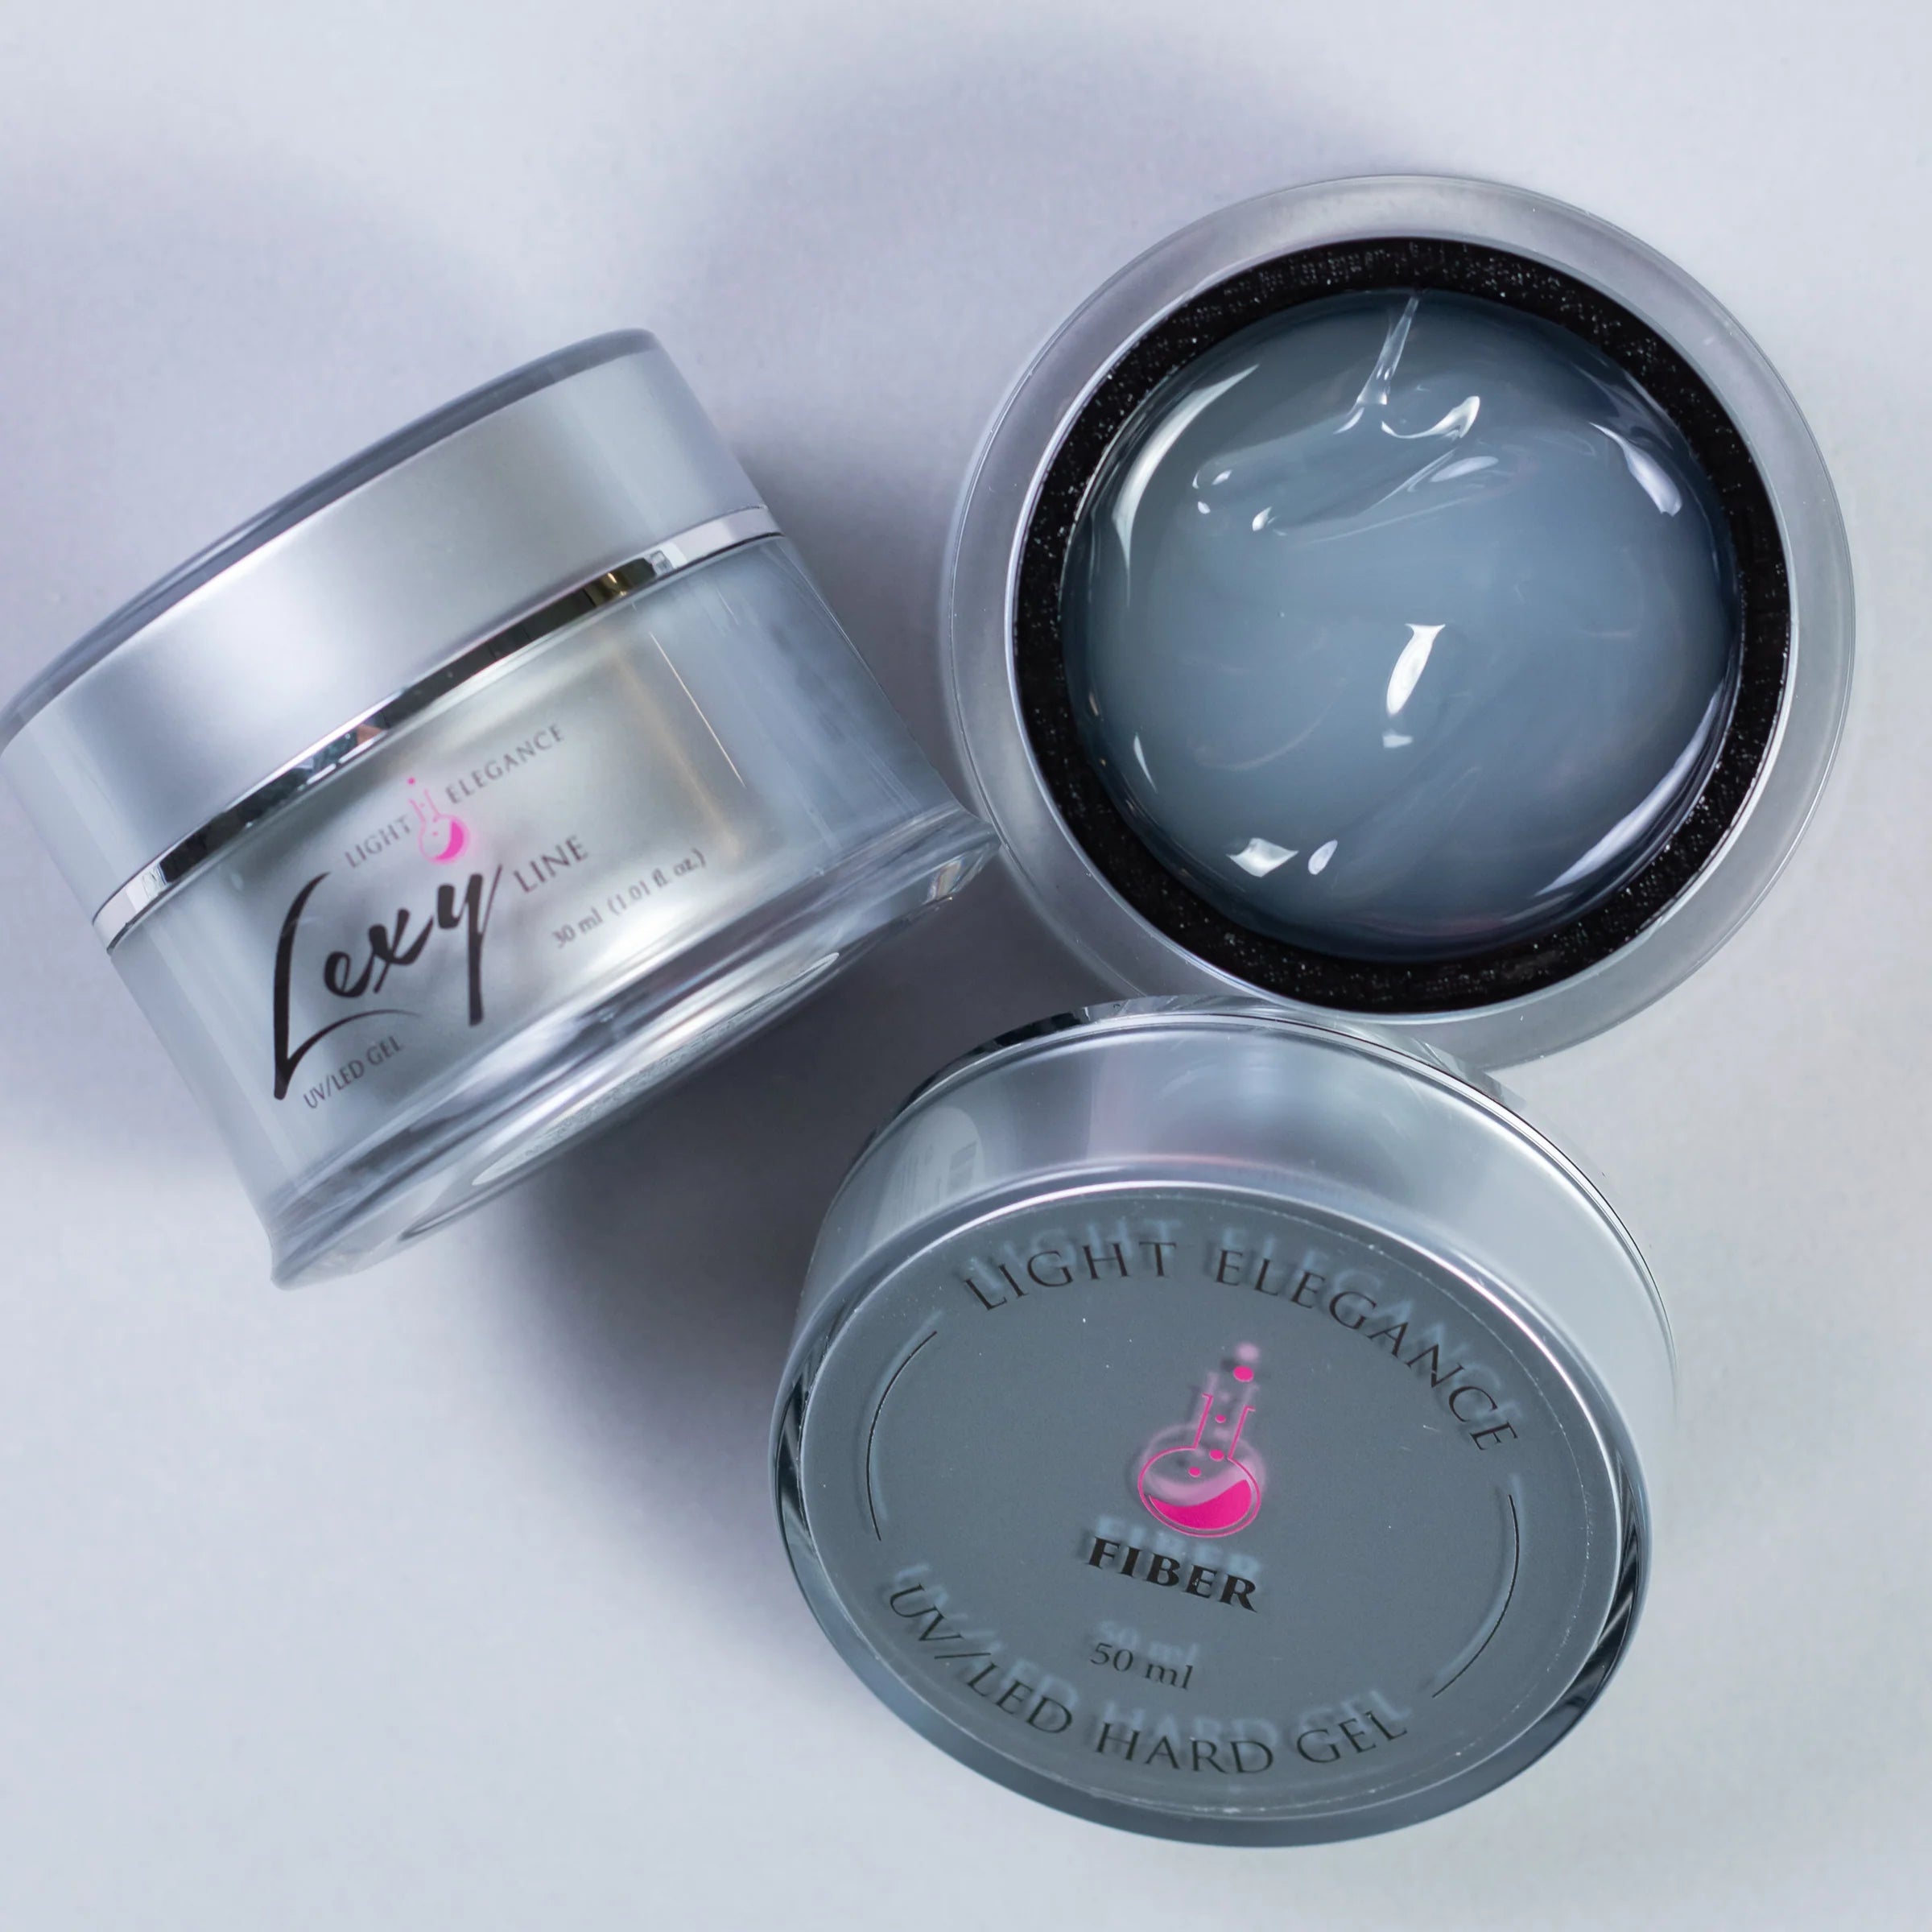 Light Elegance Lexy Line Gel - Fiber (Clear) - Creata Beauty - Professional Beauty Products